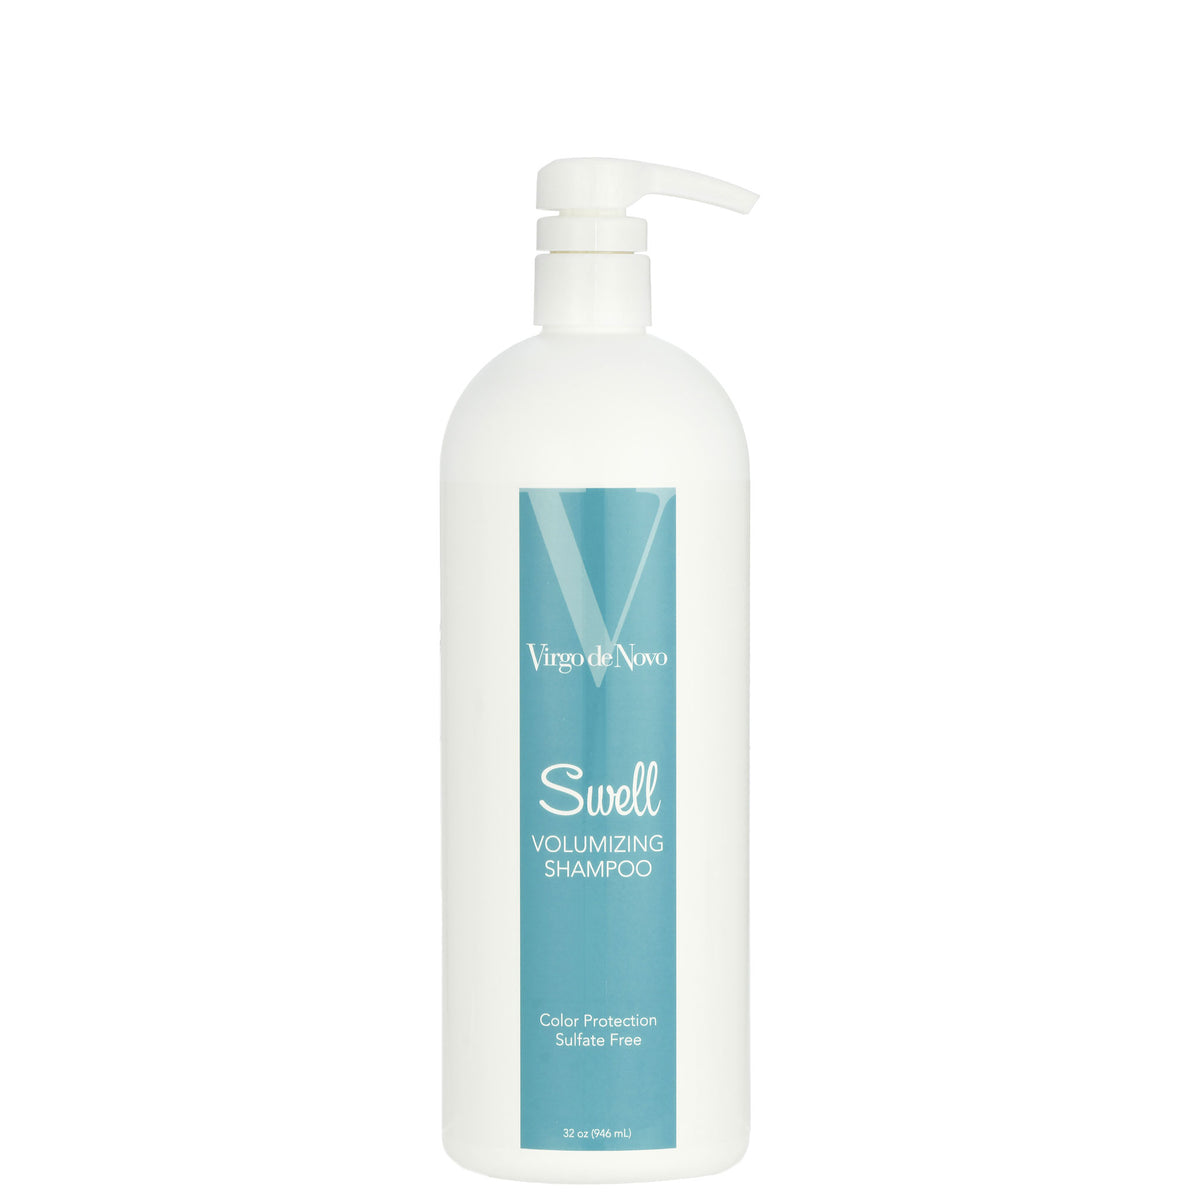 Swell Volumizing Shampoo